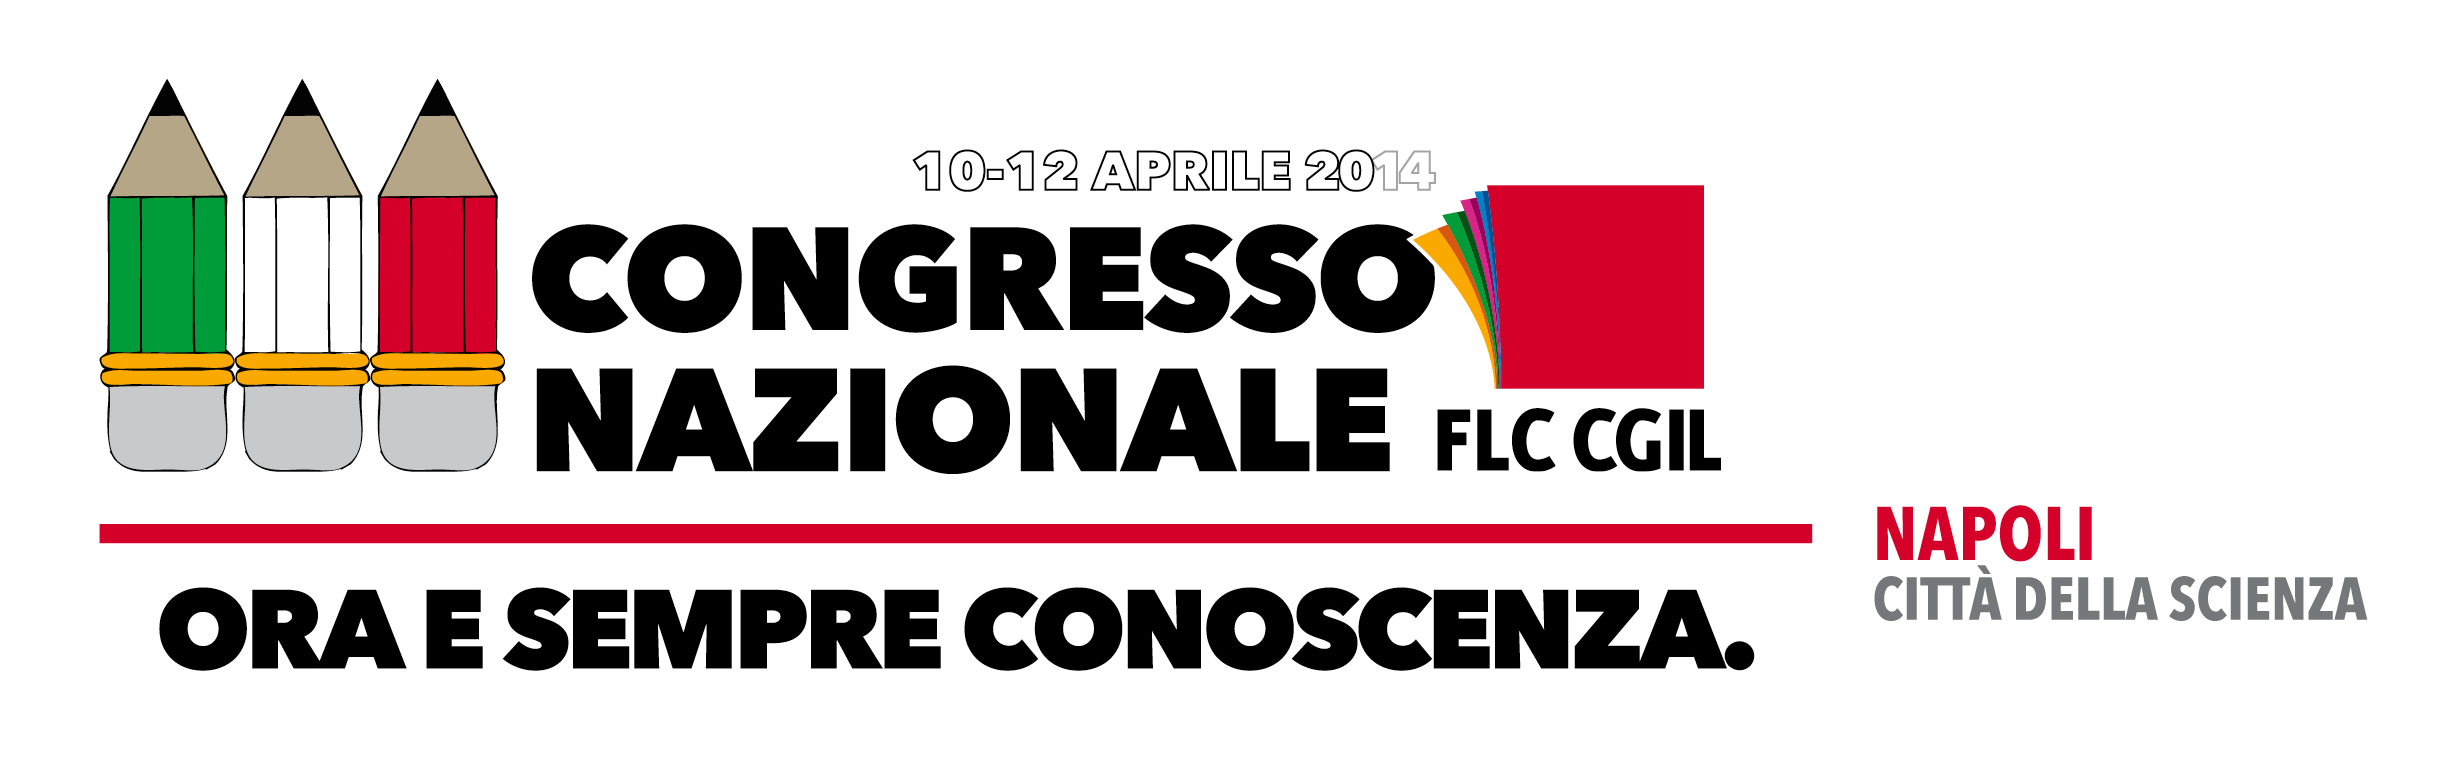 Logo 3° Congresso FLC CGIL